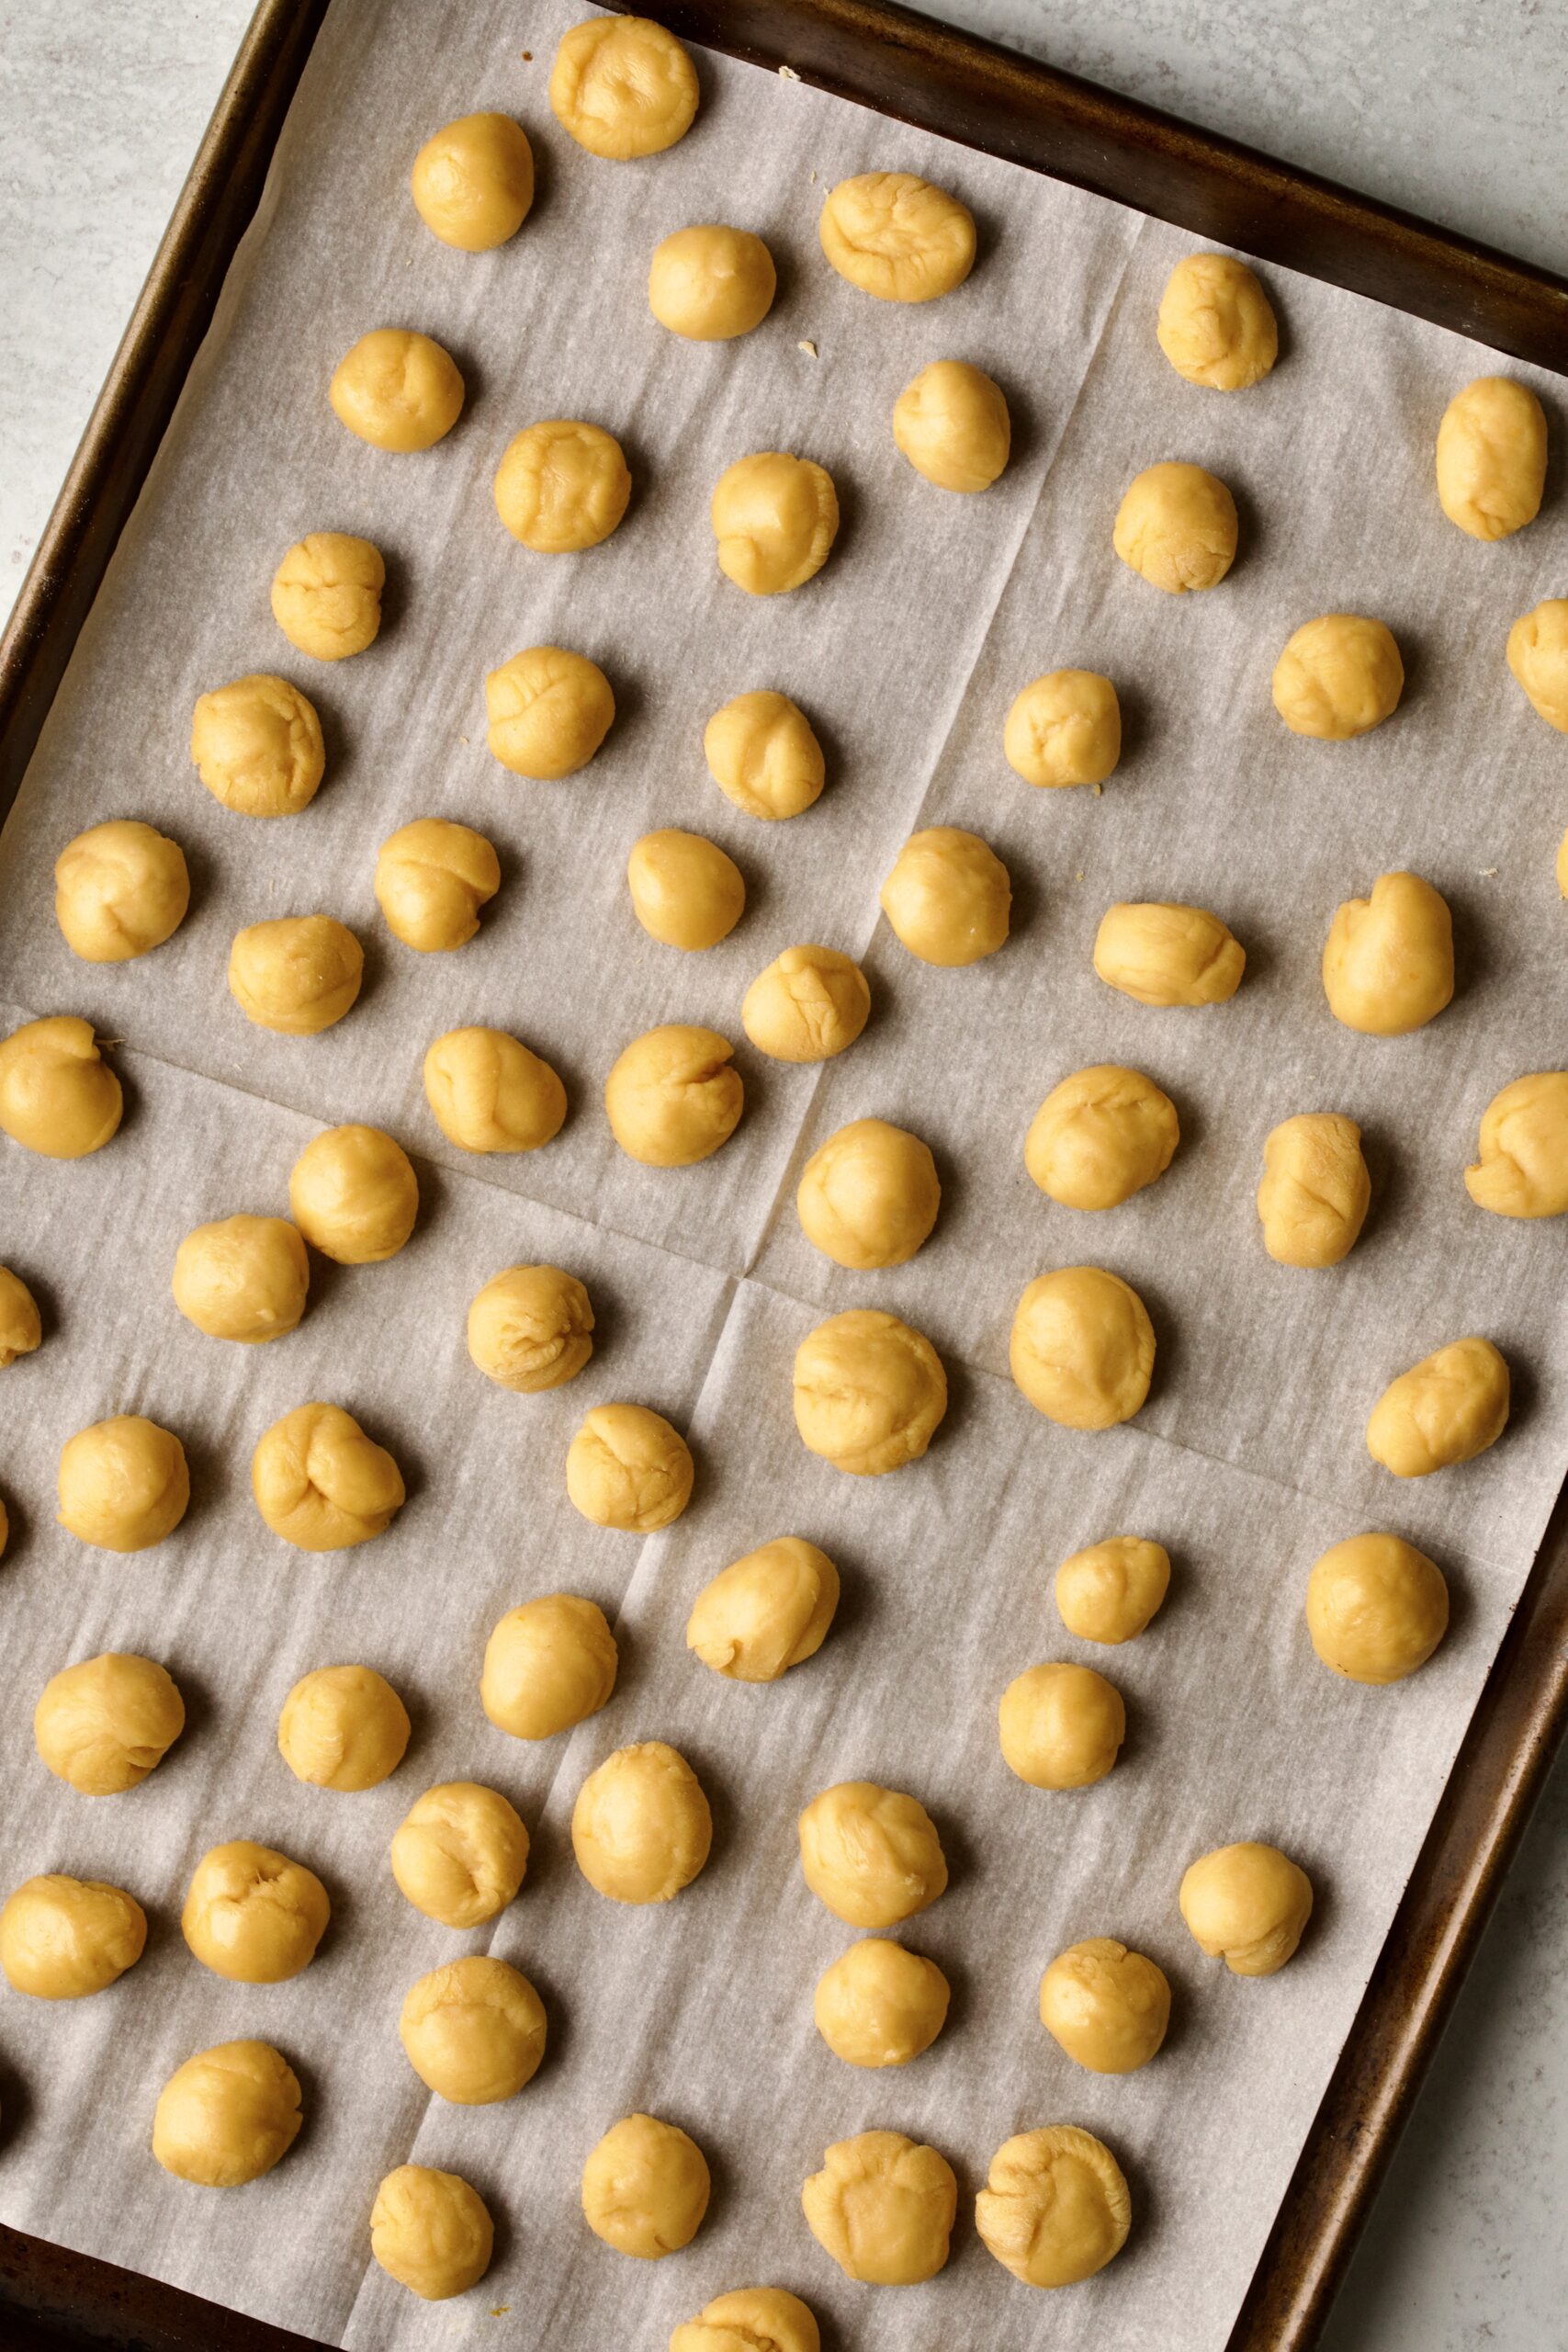 process of making authentic struffoli recipe: dough balls ready to fry.